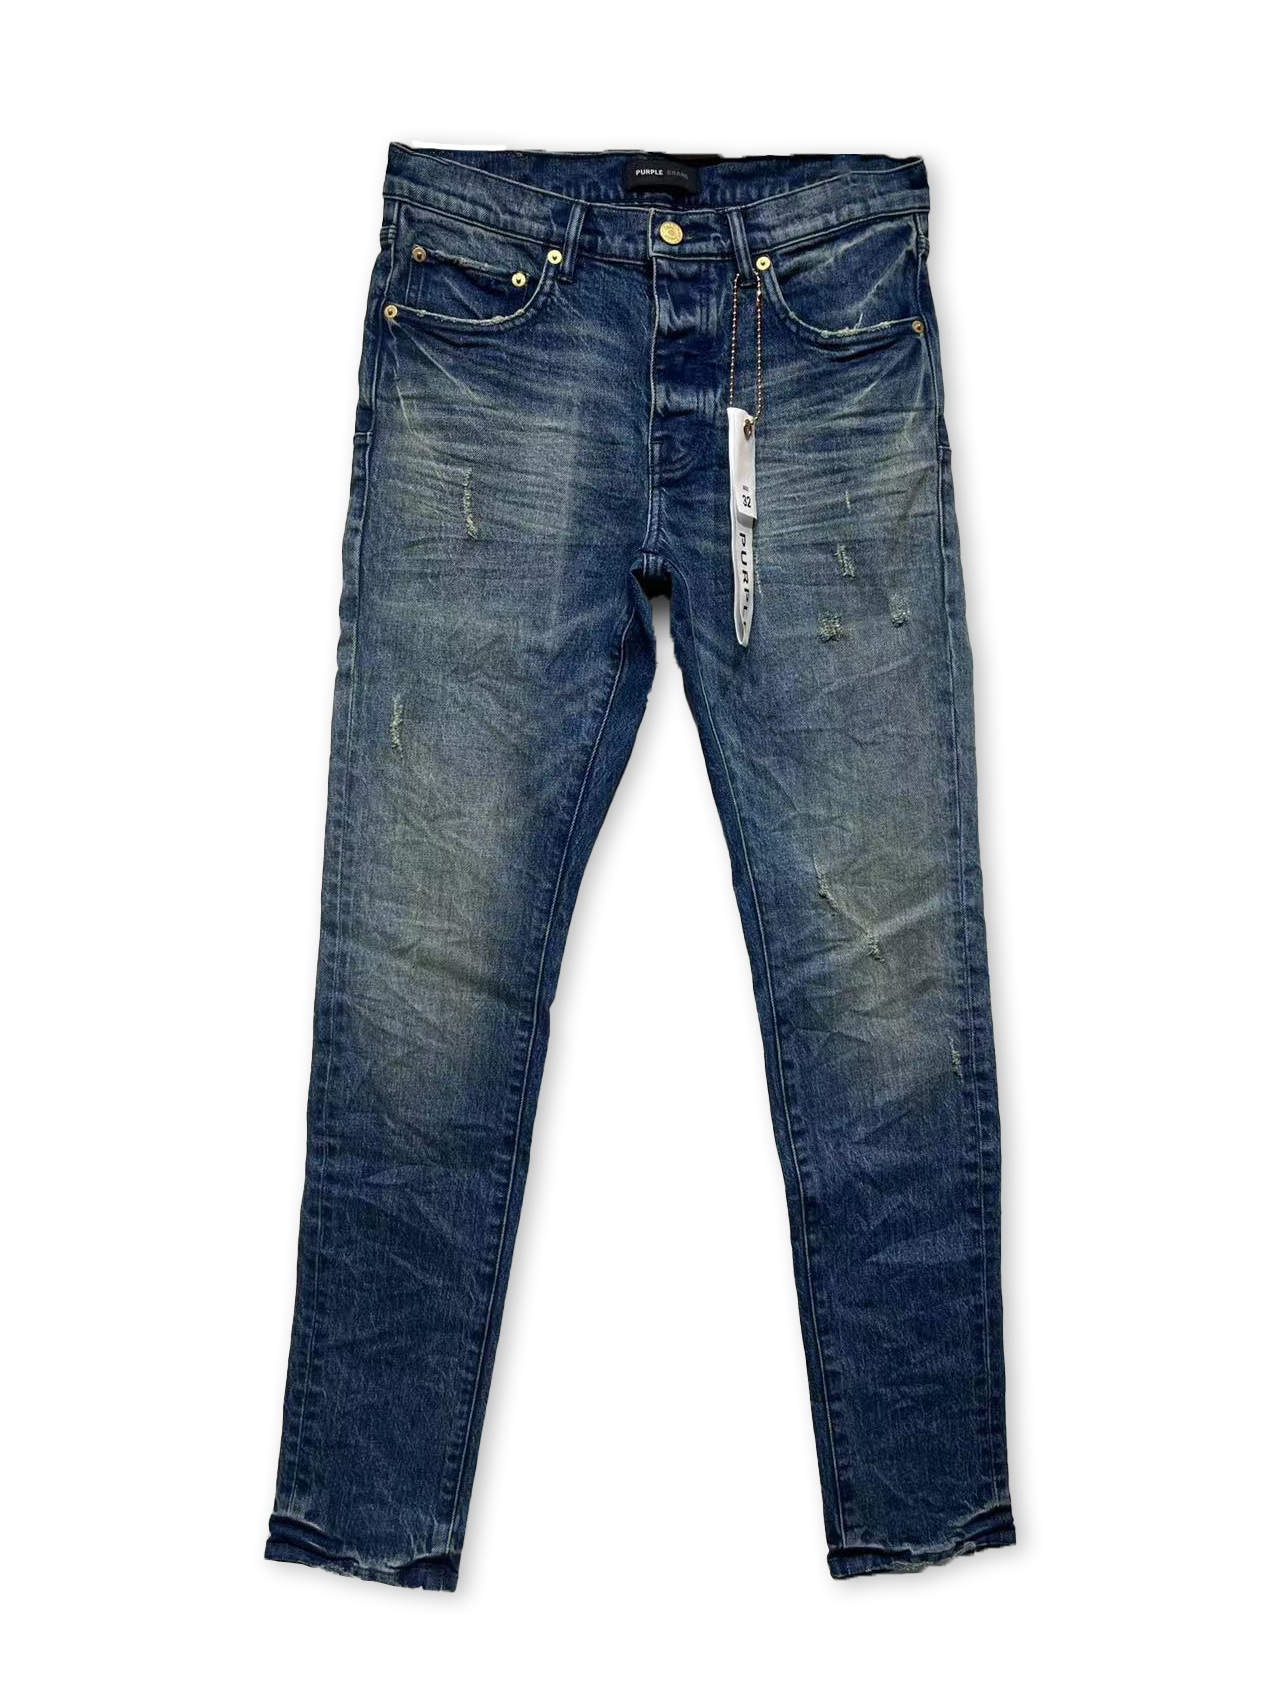 purple brand jeans 36 - Gem